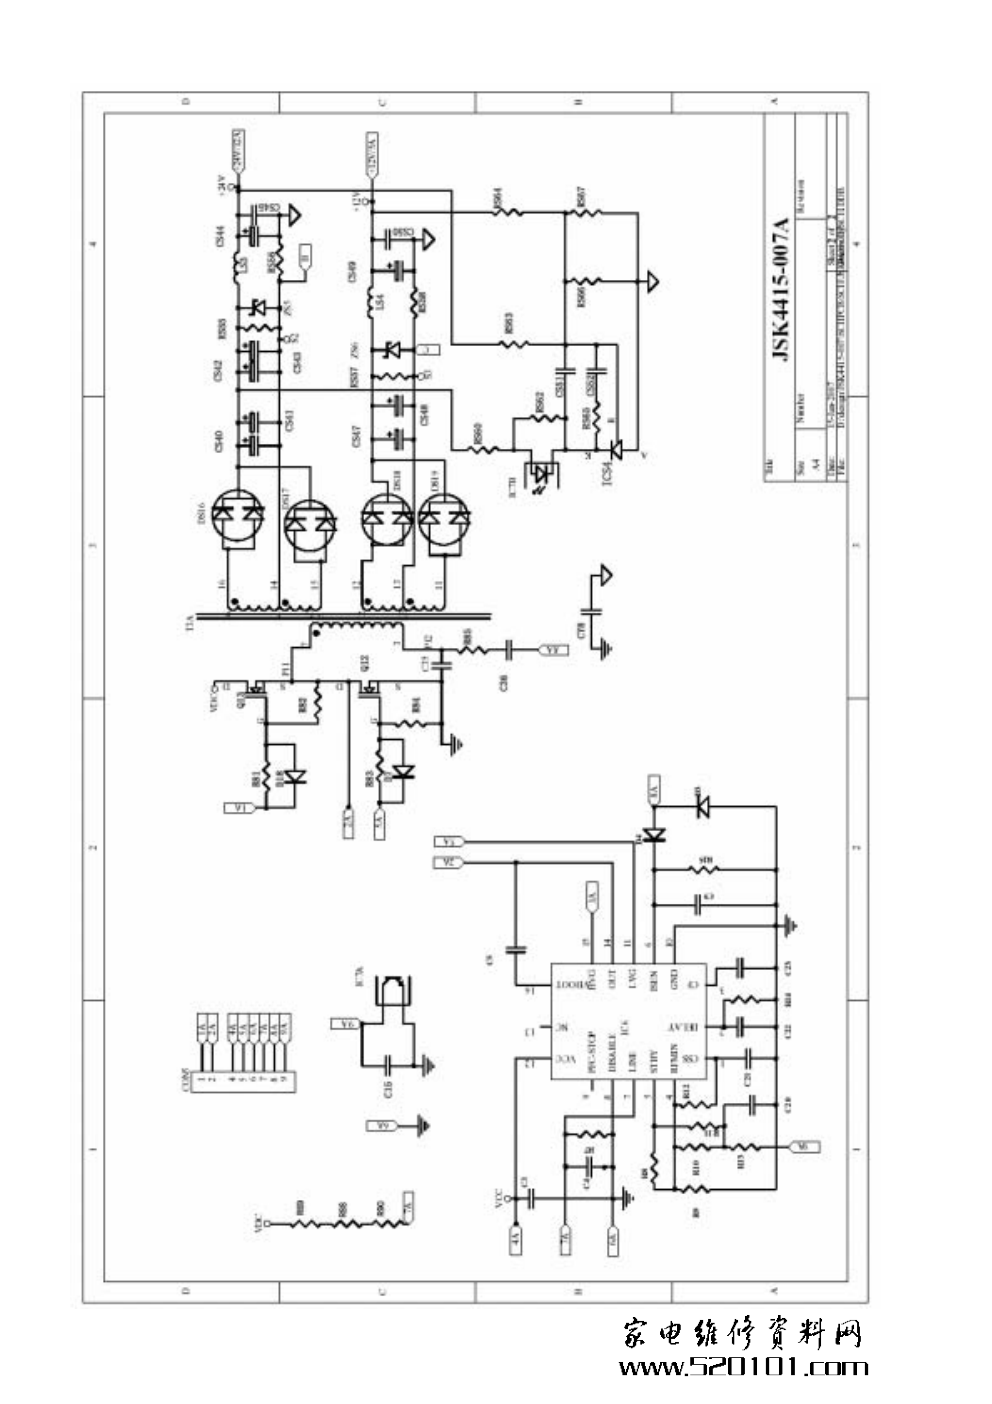 TCL LC4622-PW0(晶辰)电源板电路原理图（清晰度低）-1